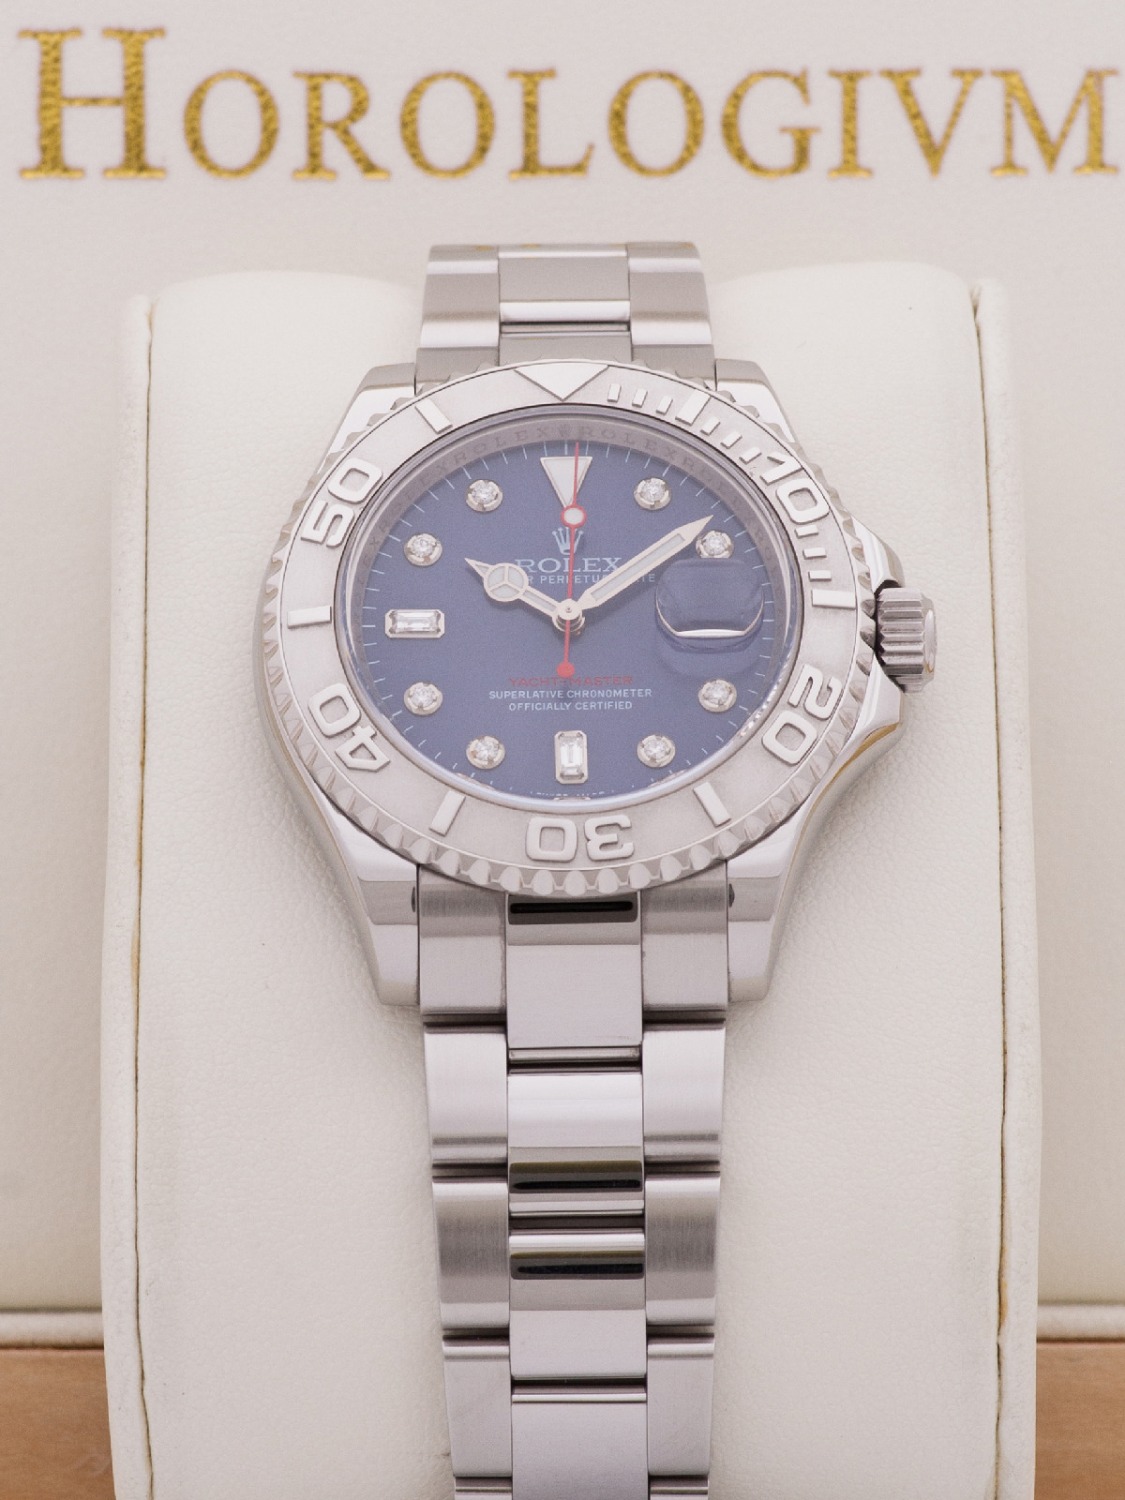 Rolex Yacht-Master 40MM Blue Dial watch, silver